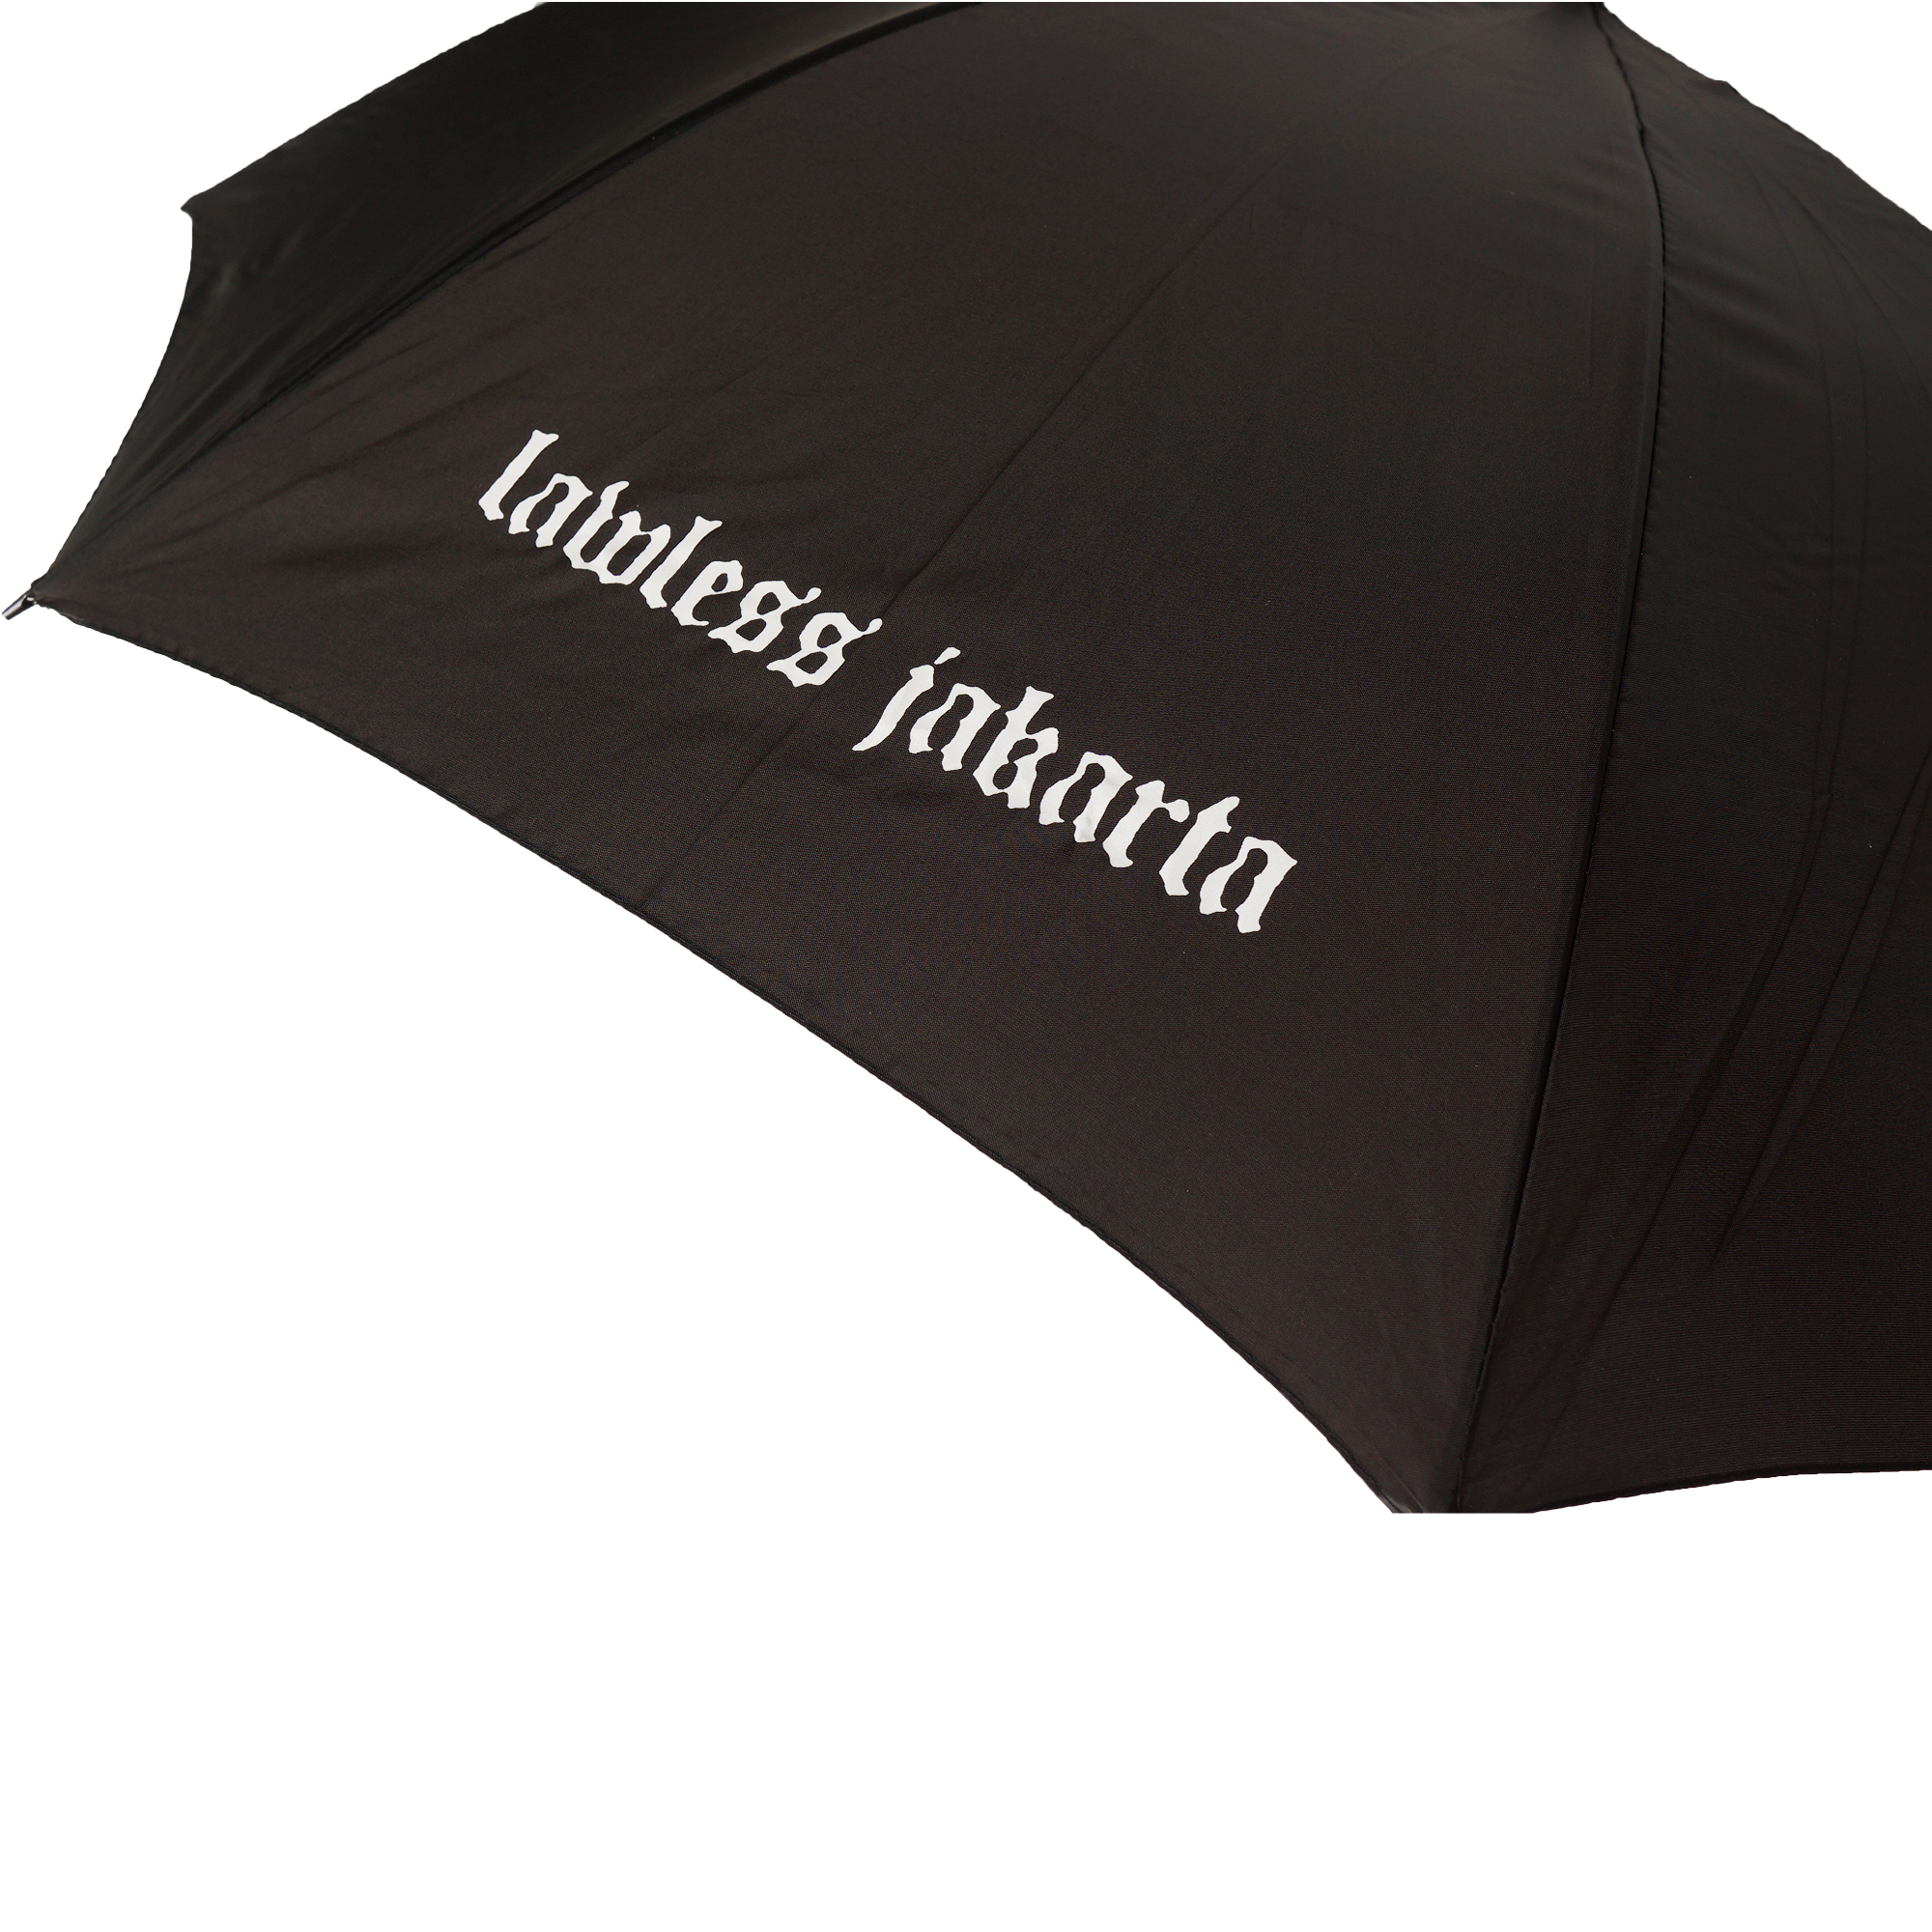 lawless-umbrella-detail-3